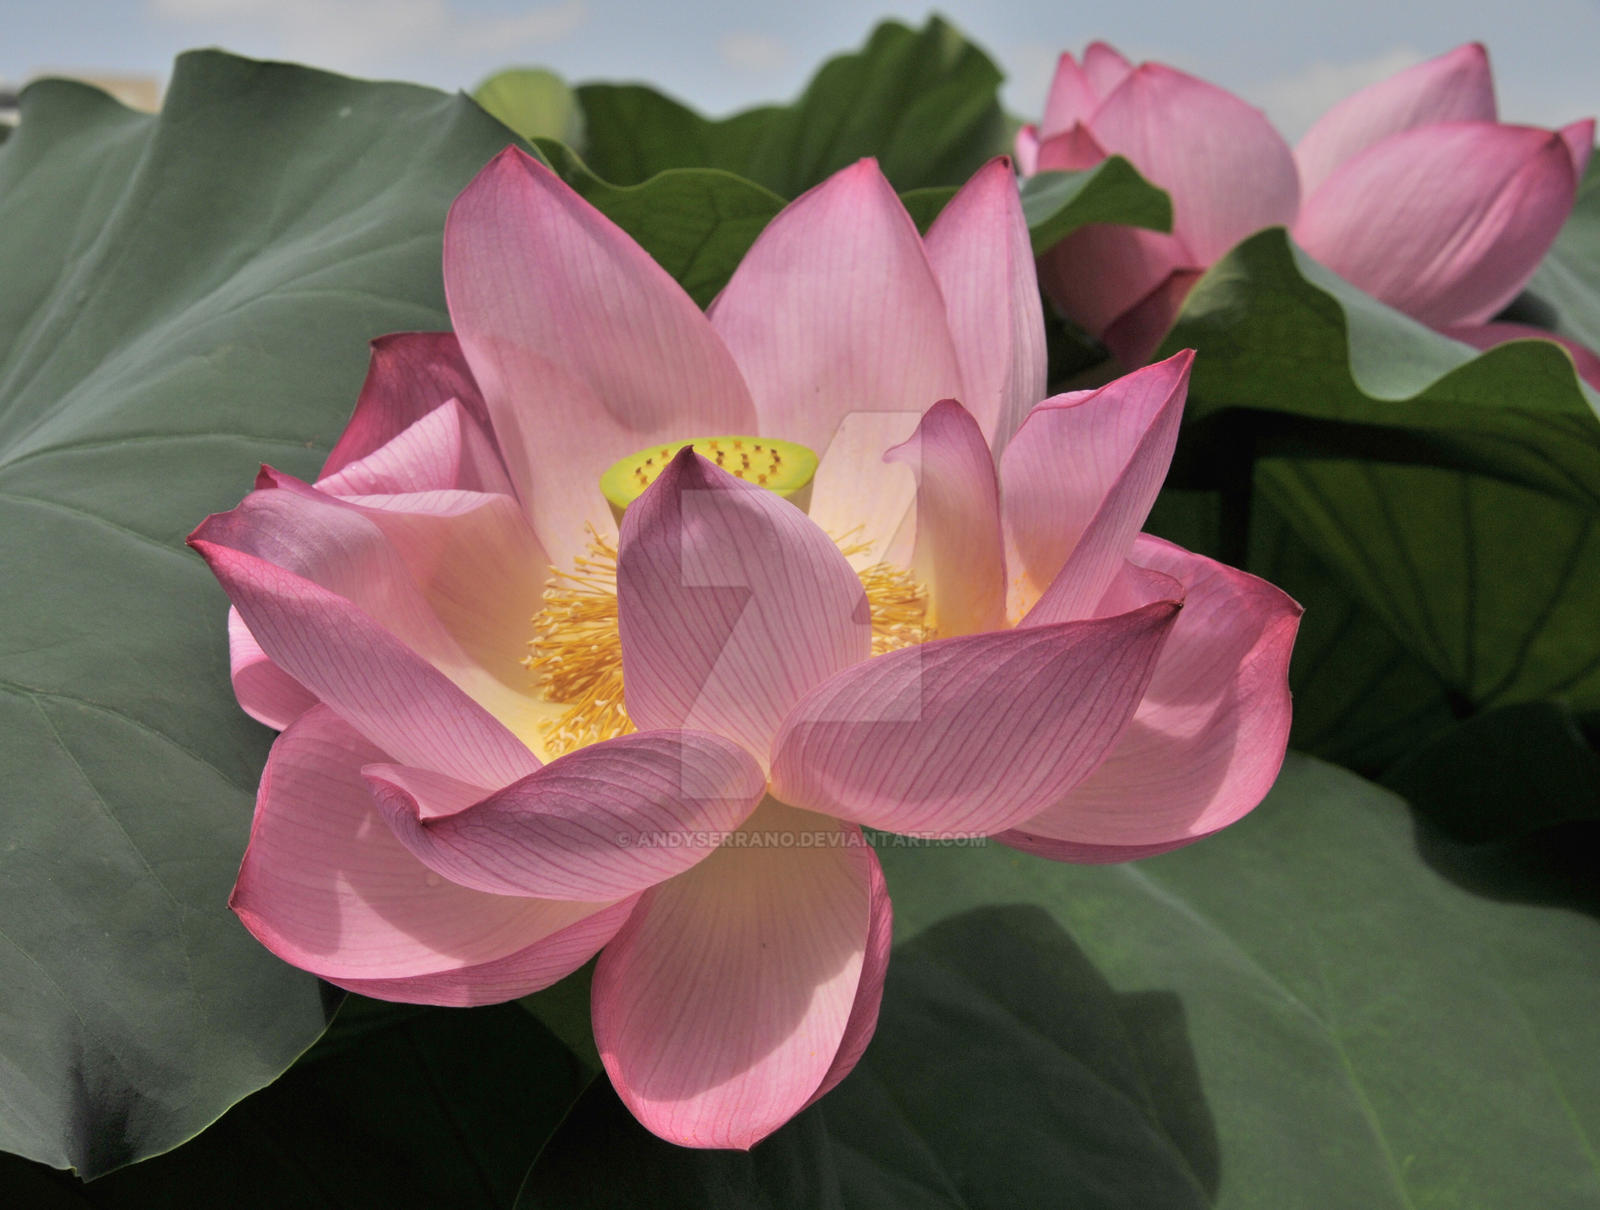 Ueno Park Lotus Blossom